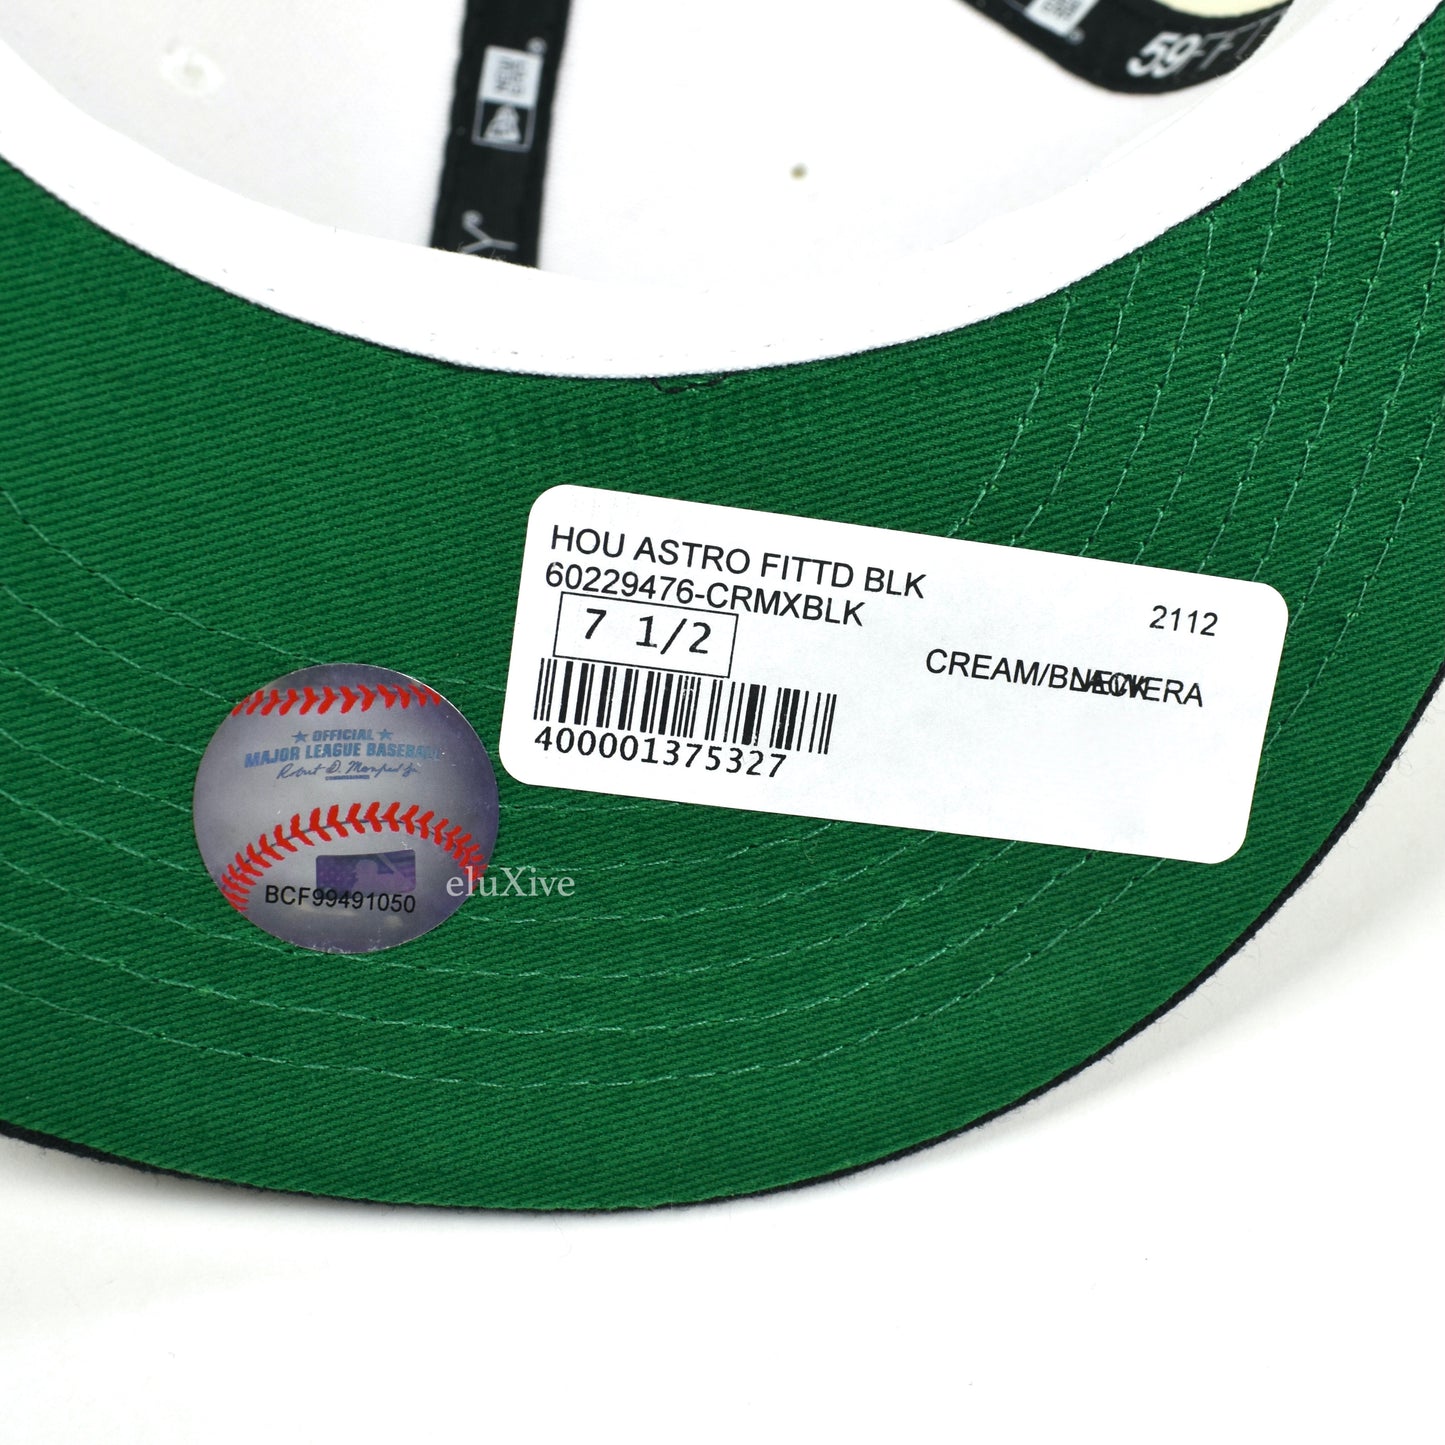 A Ma Maniere x New Era - Houston Astros Fitted Hat (Black Bill)